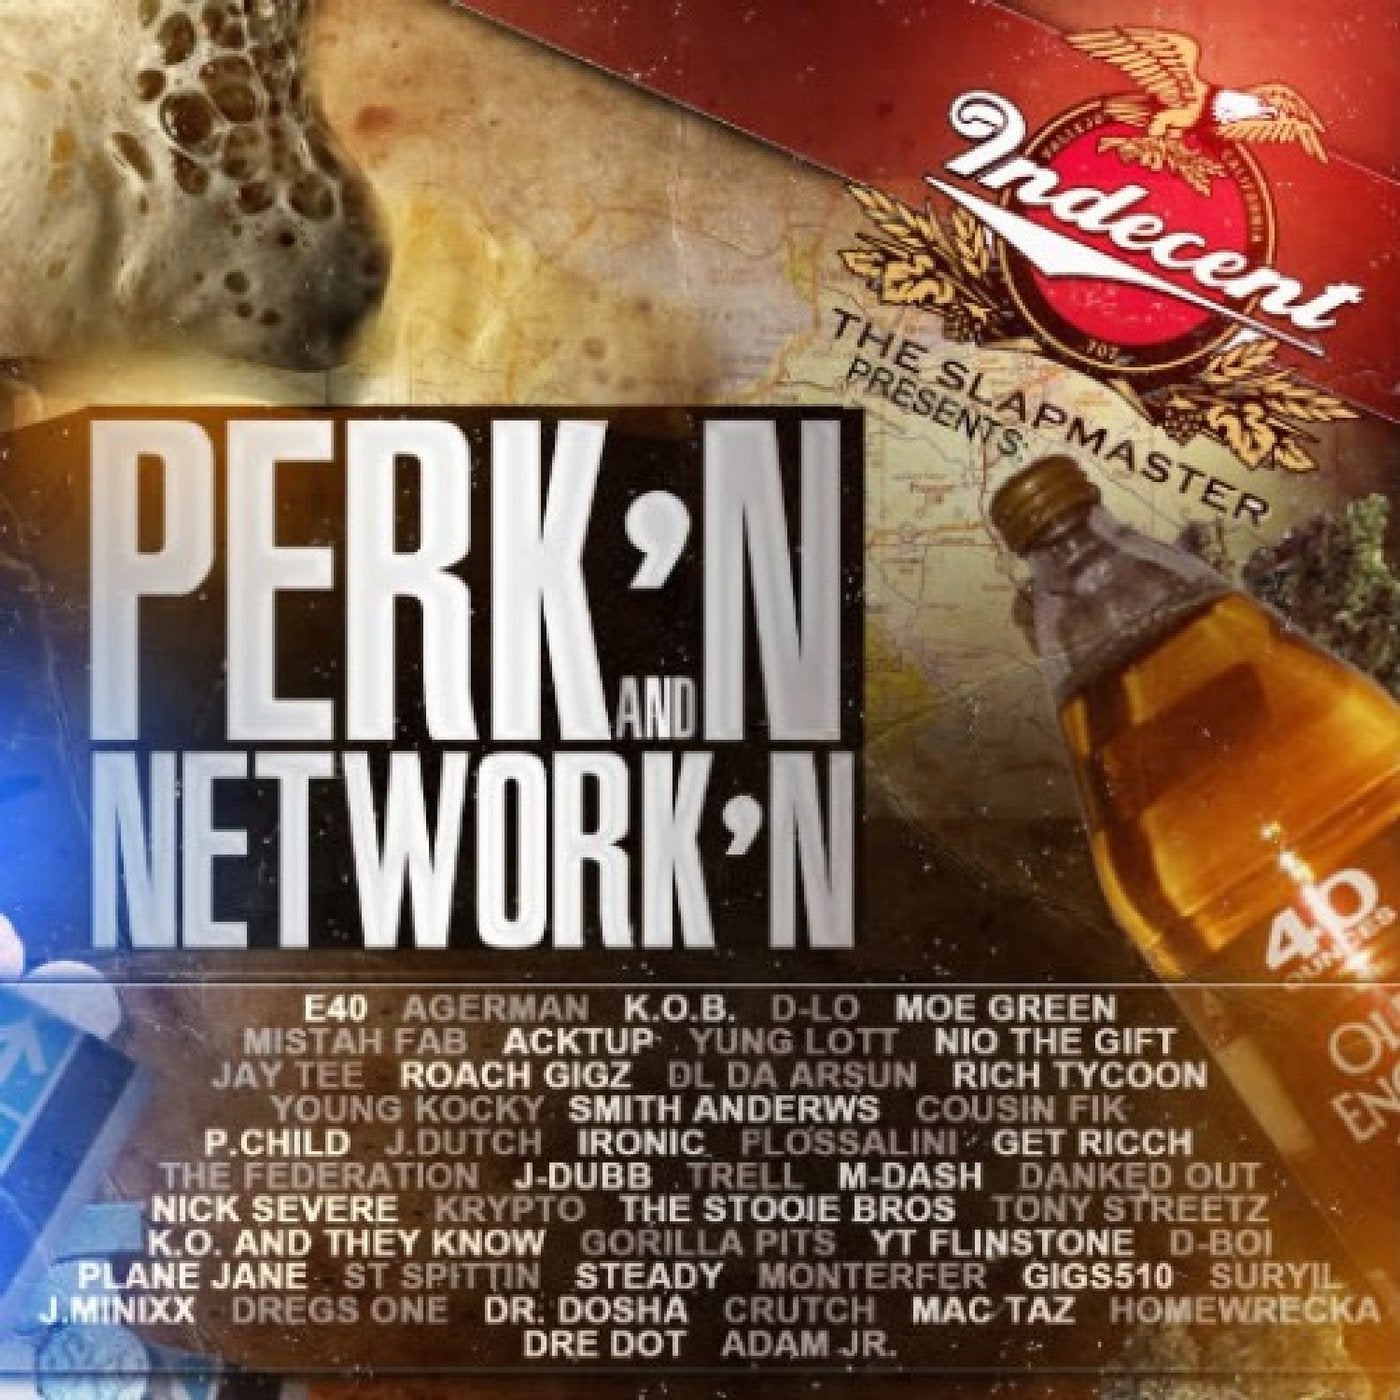 Indecent The Slapmaster Presents: Perk'n and Network'n